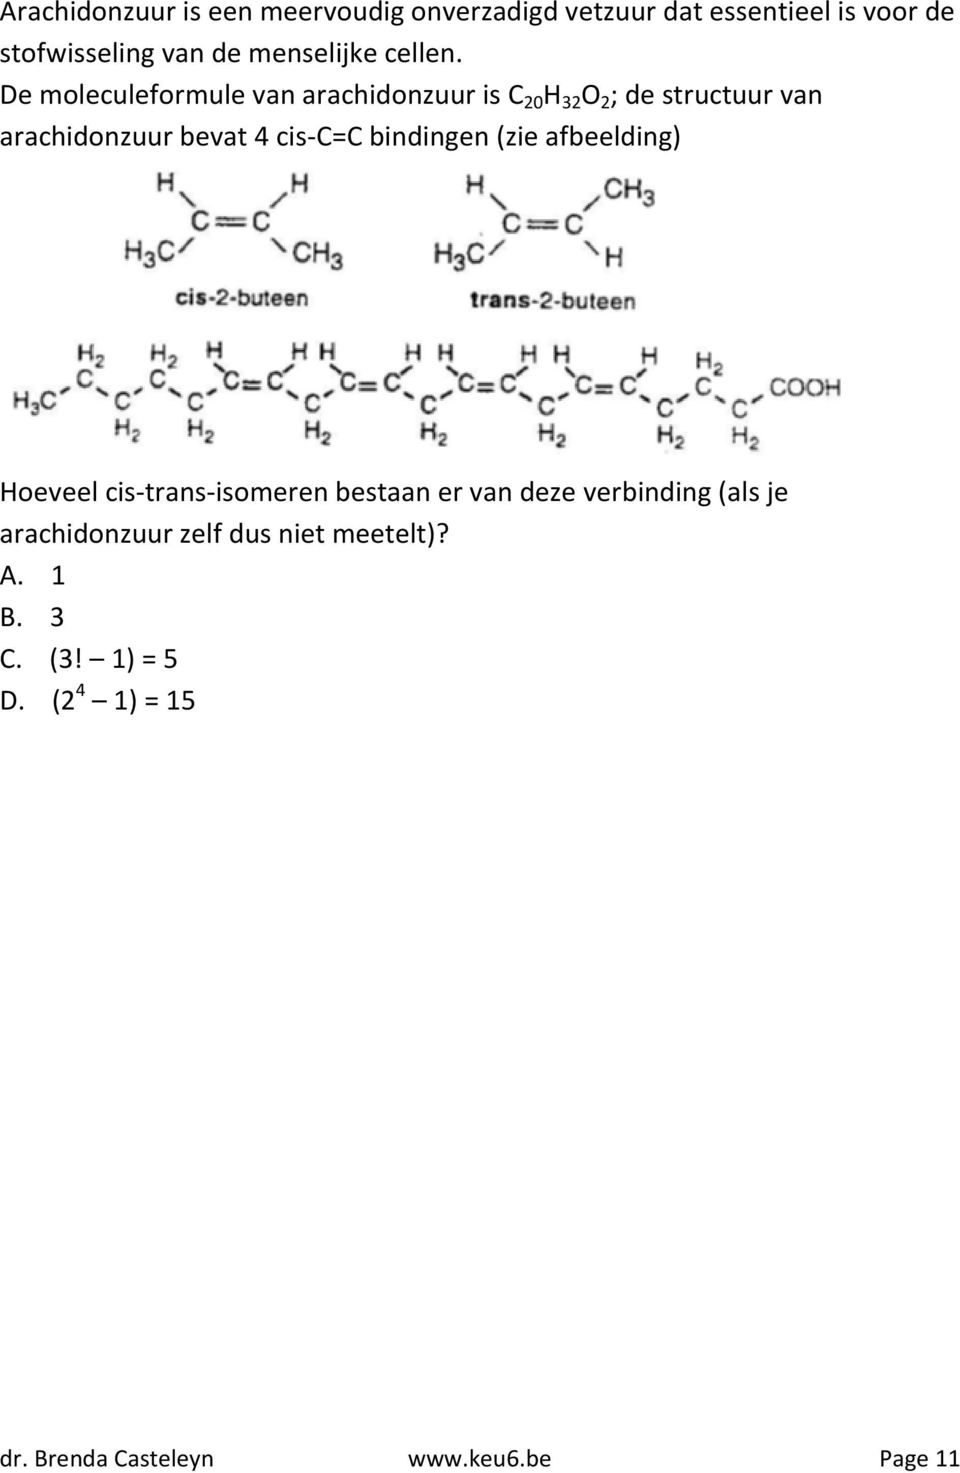 De moleculeformule van arachidonzuur is C 20 H 32 O 2 ; de structuur van arachidonzuur bevat 4 cis-c=c